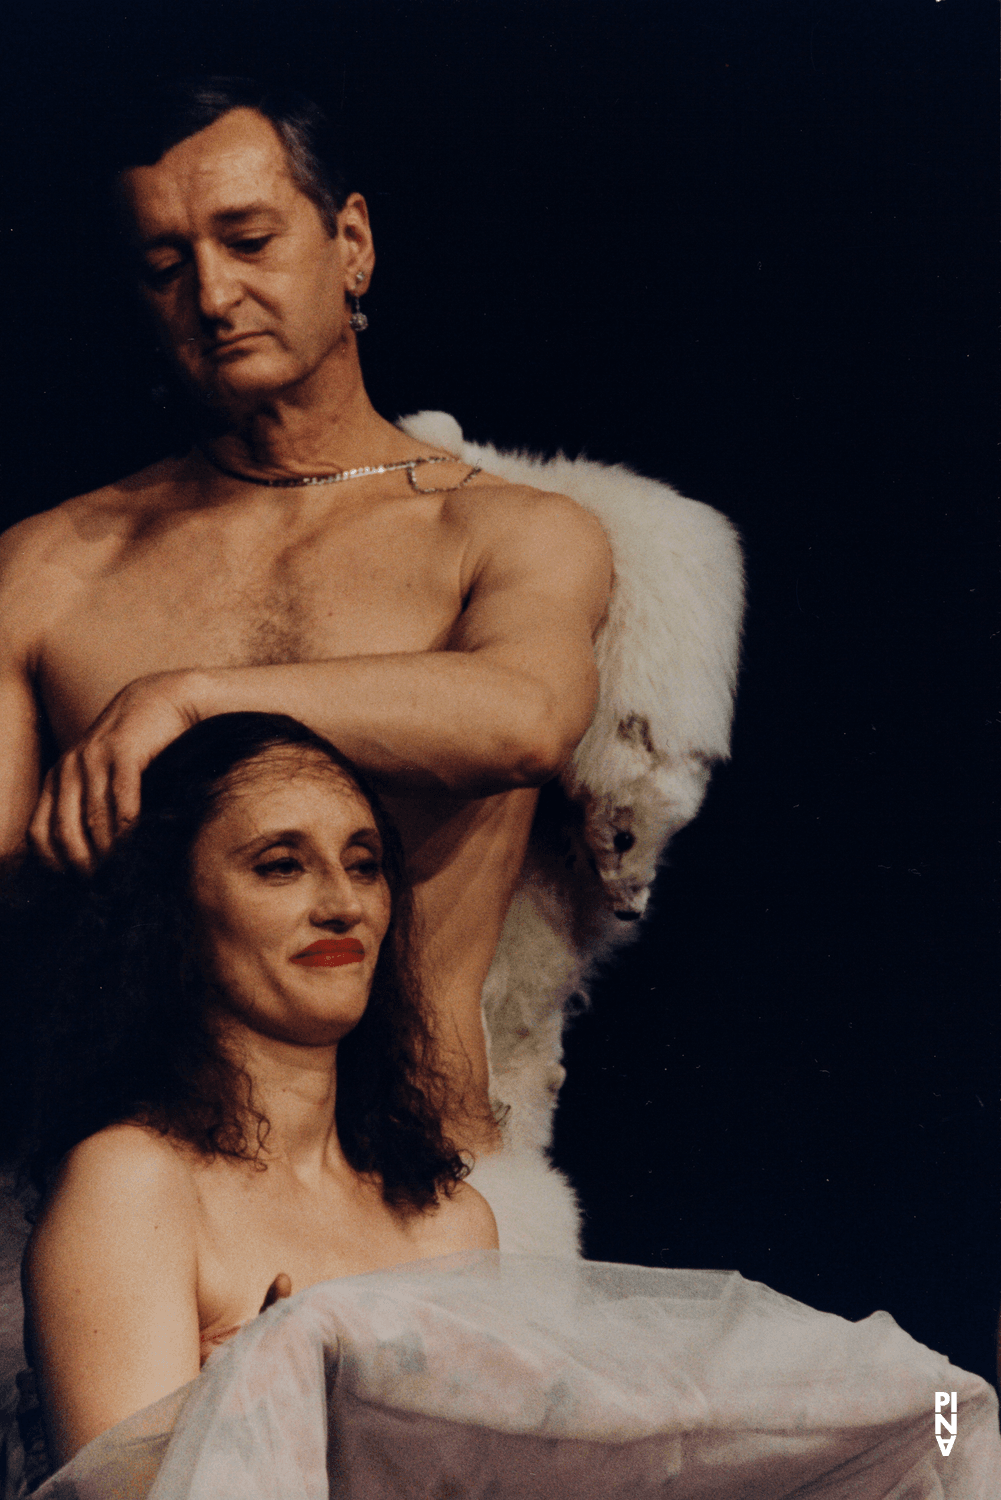 Jan Minařík et Nazareth Panadero dans « Nur Du » de Pina Bausch, 11 mai 1996